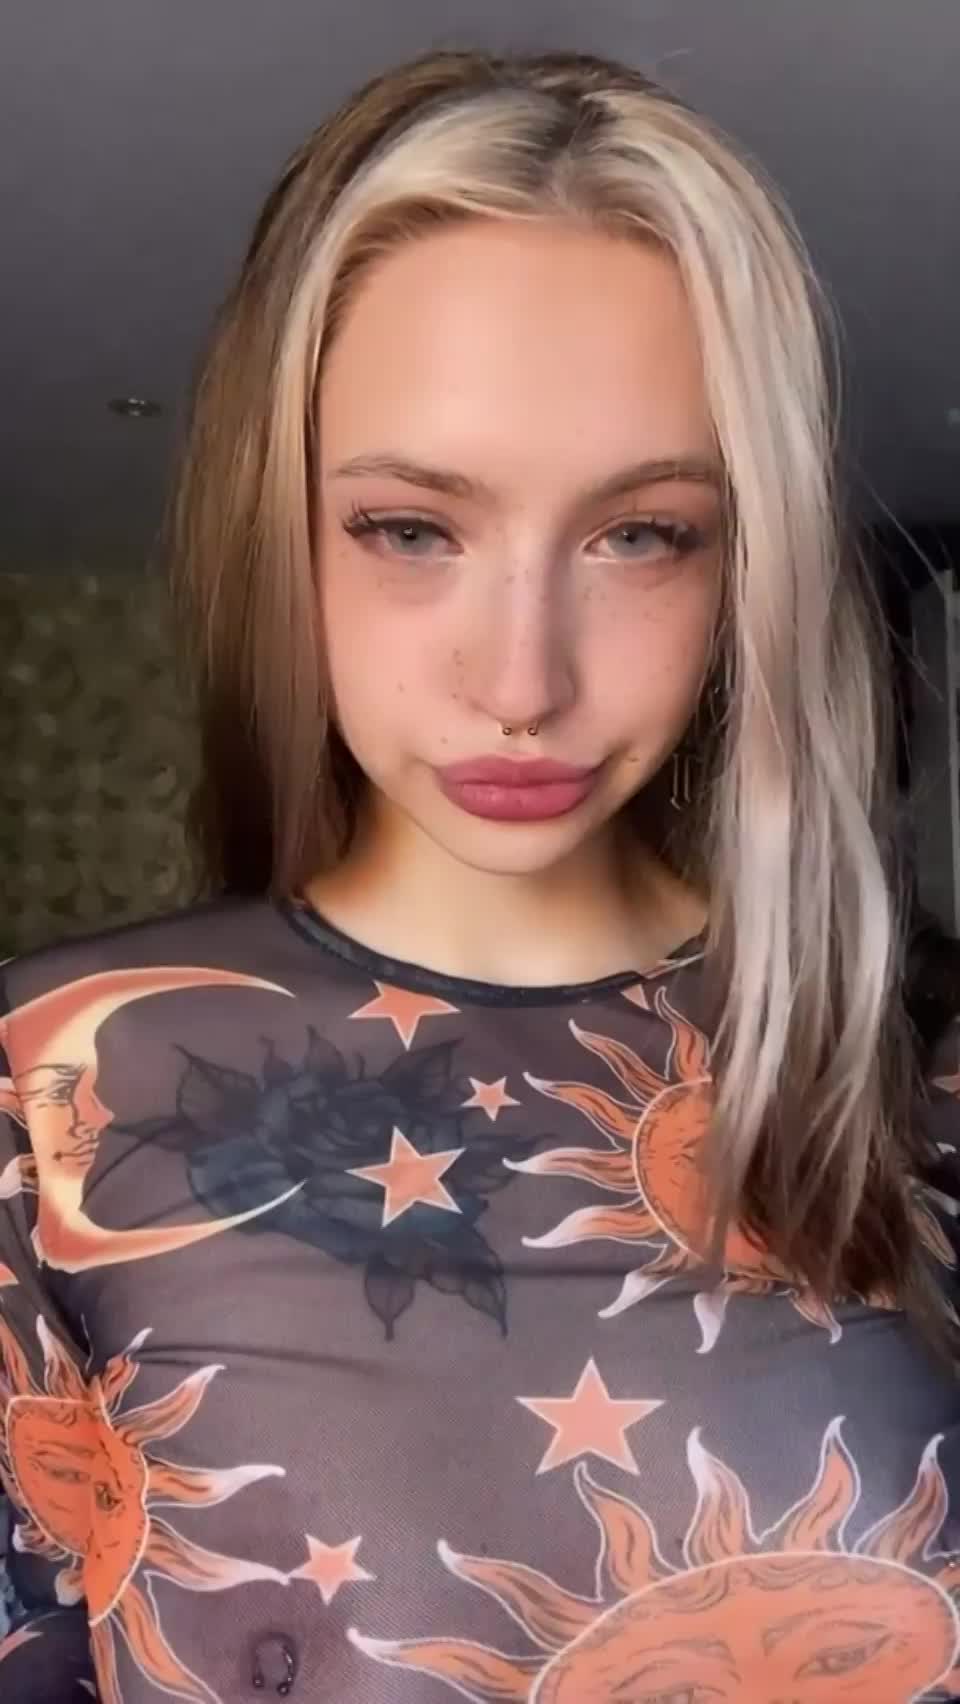 vi_gray beautiful teen with puffy lips